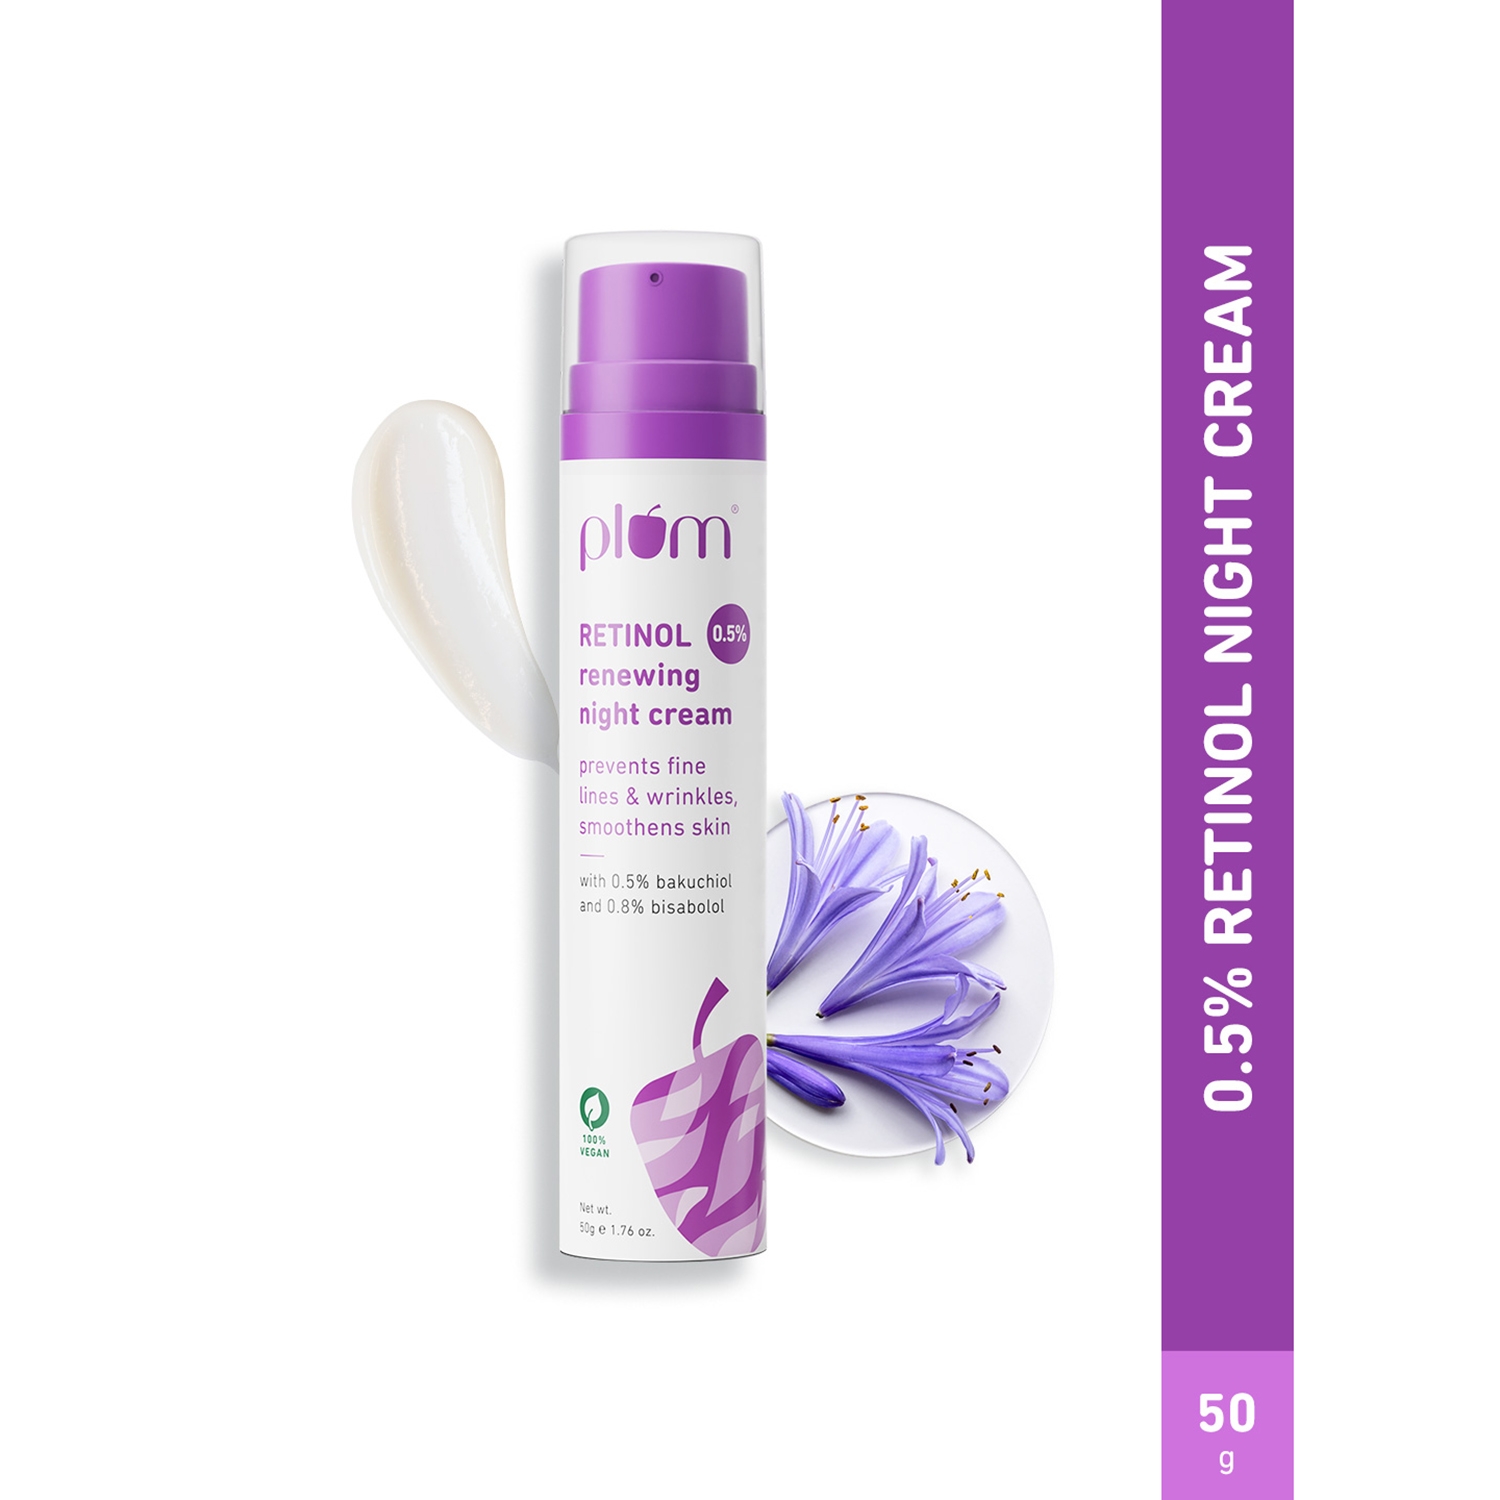 Plum | Plum 0.5% Retinol Anti-Aging Night Cream, Boosting Collagen, Fighting Wrinkles & Fine Lines (50ml)